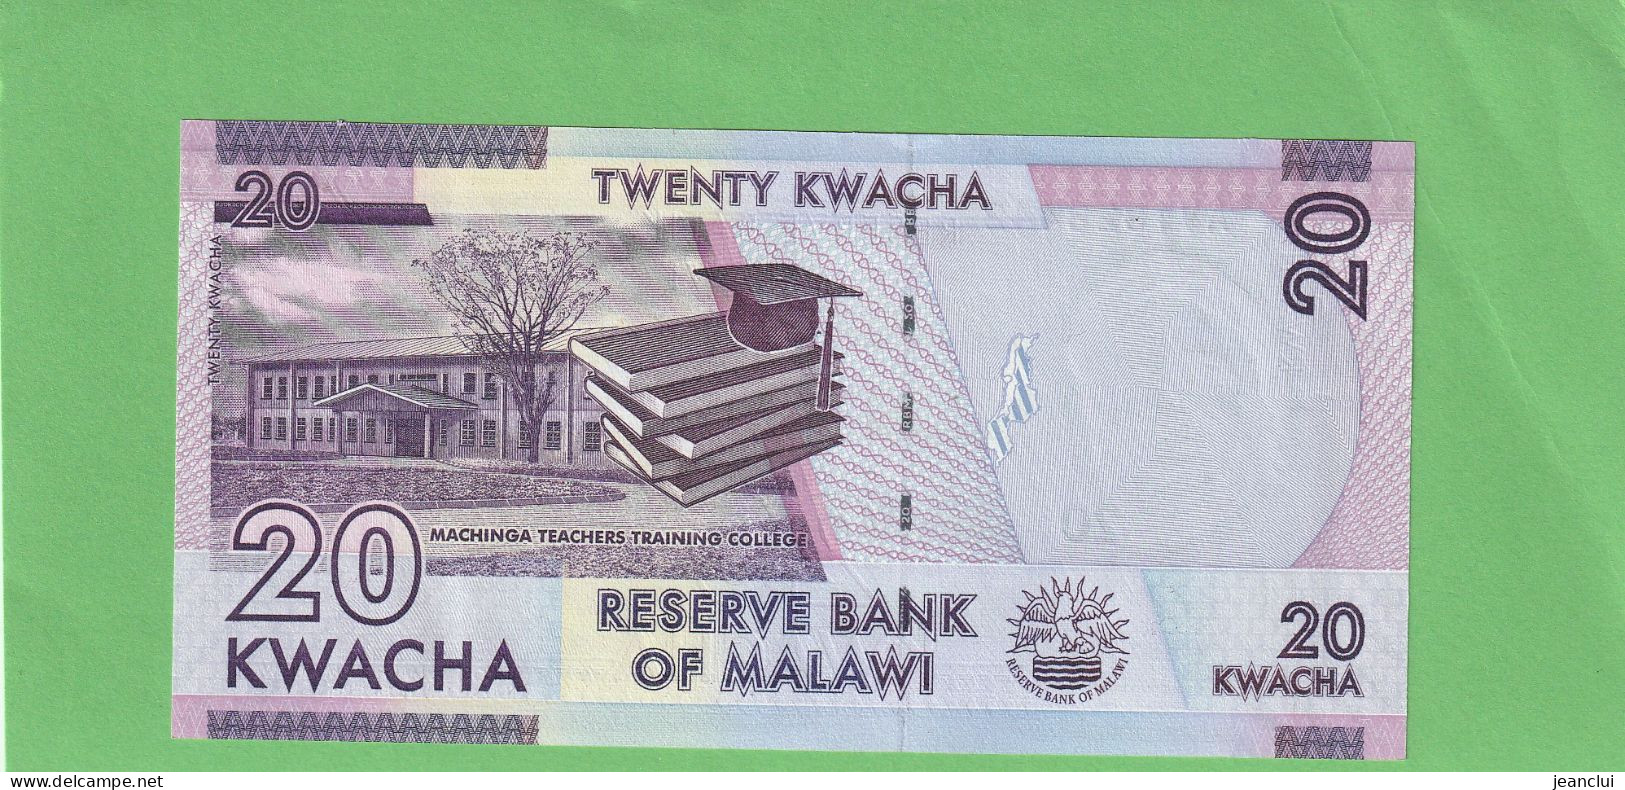 RESERVE BANK OF MALAWI  .  20 KWACHA  .  1-1-2015   .  N°  AV 1823442   .  2 SCANNES  .  ETAT LUXE  .  UNC - Malawi